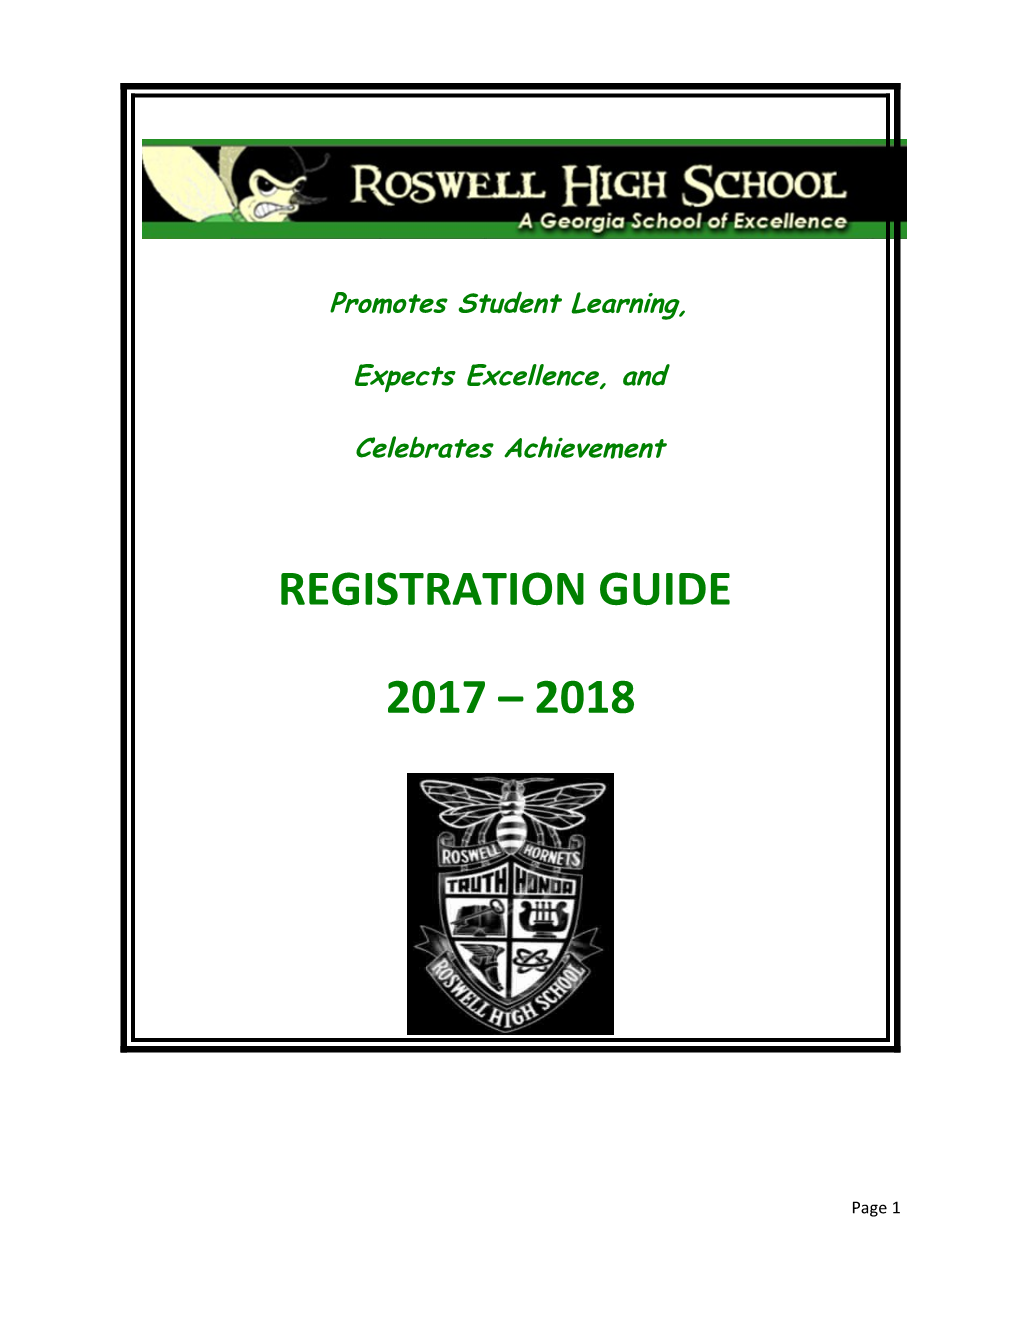 RHS Course Catalog 2017-2018